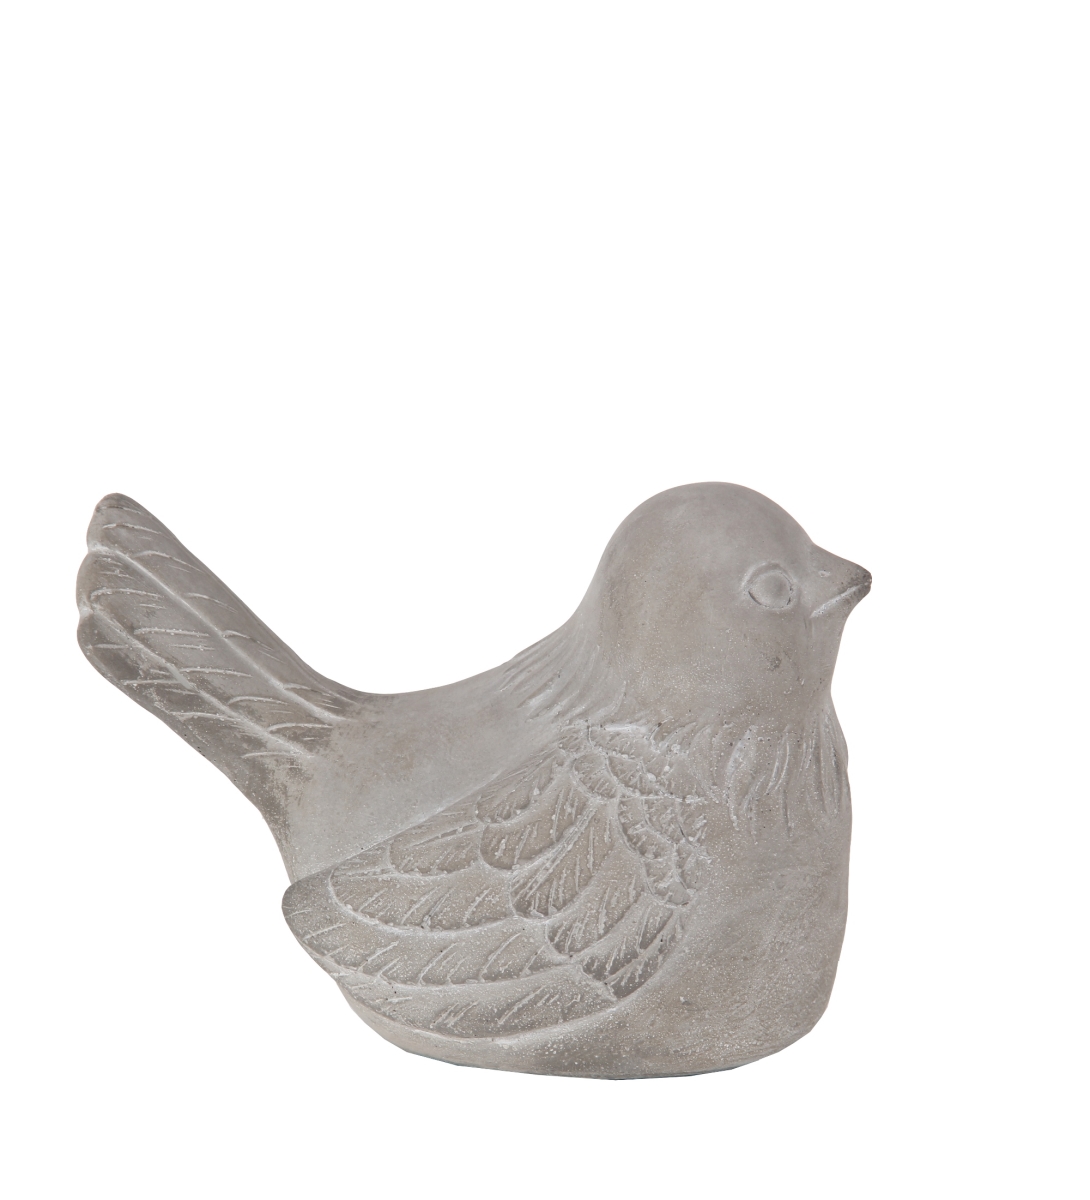 007-00009 8 X 5.5 X 6 In. Traditional Cement Bird, Grey